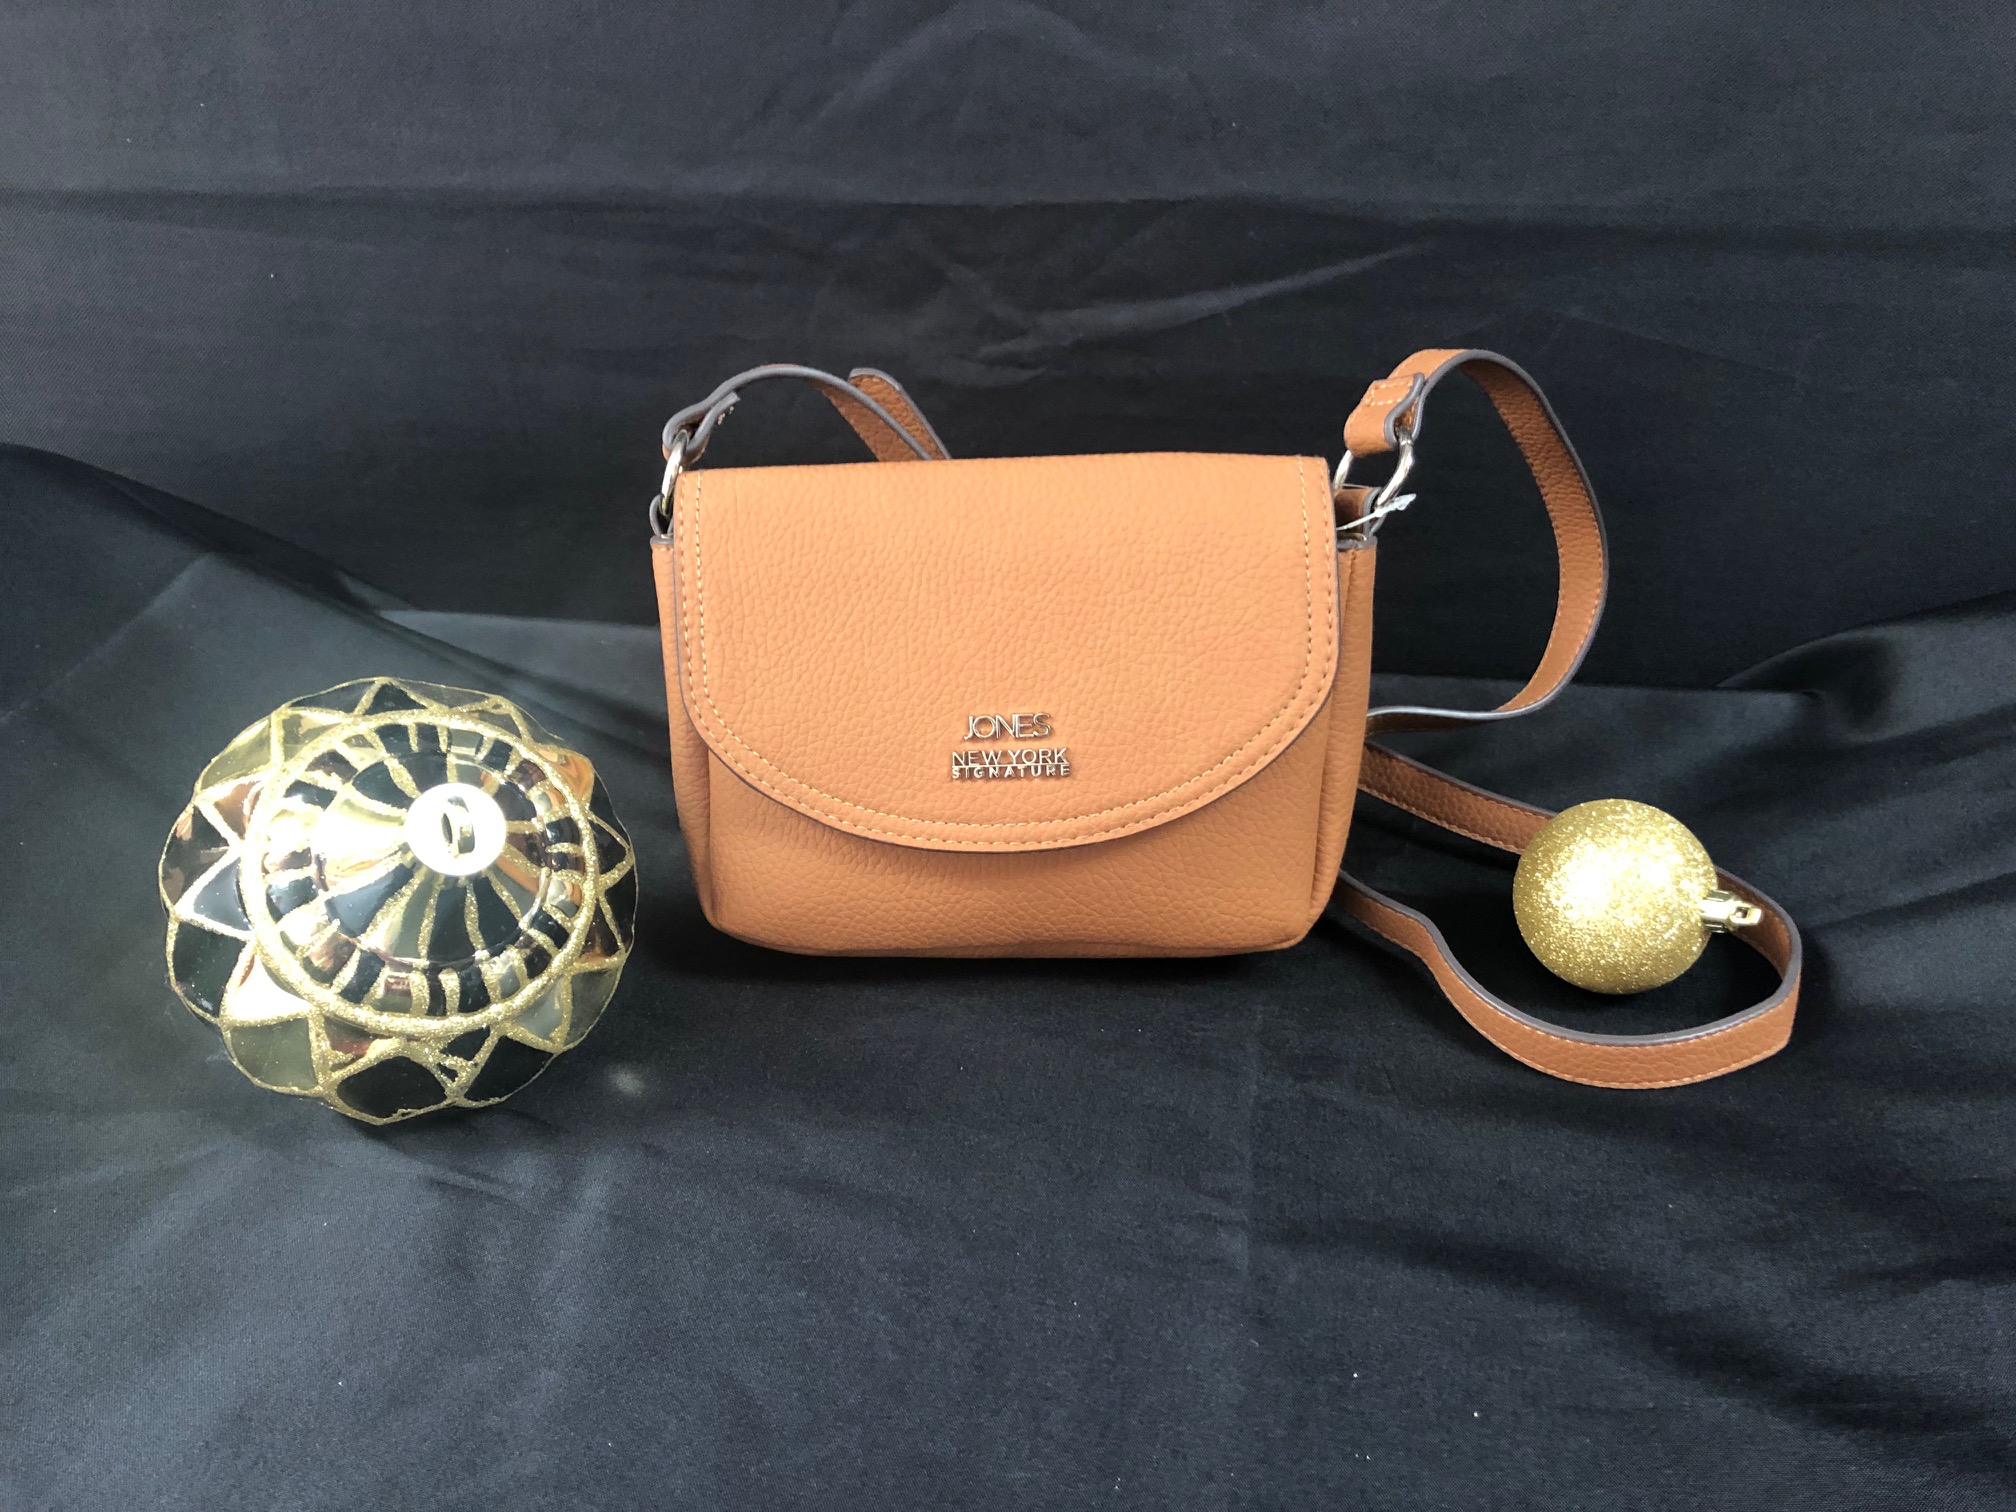 Jones New York Crossbody Women's Adjustable Strap Handbags & Bags | eBay